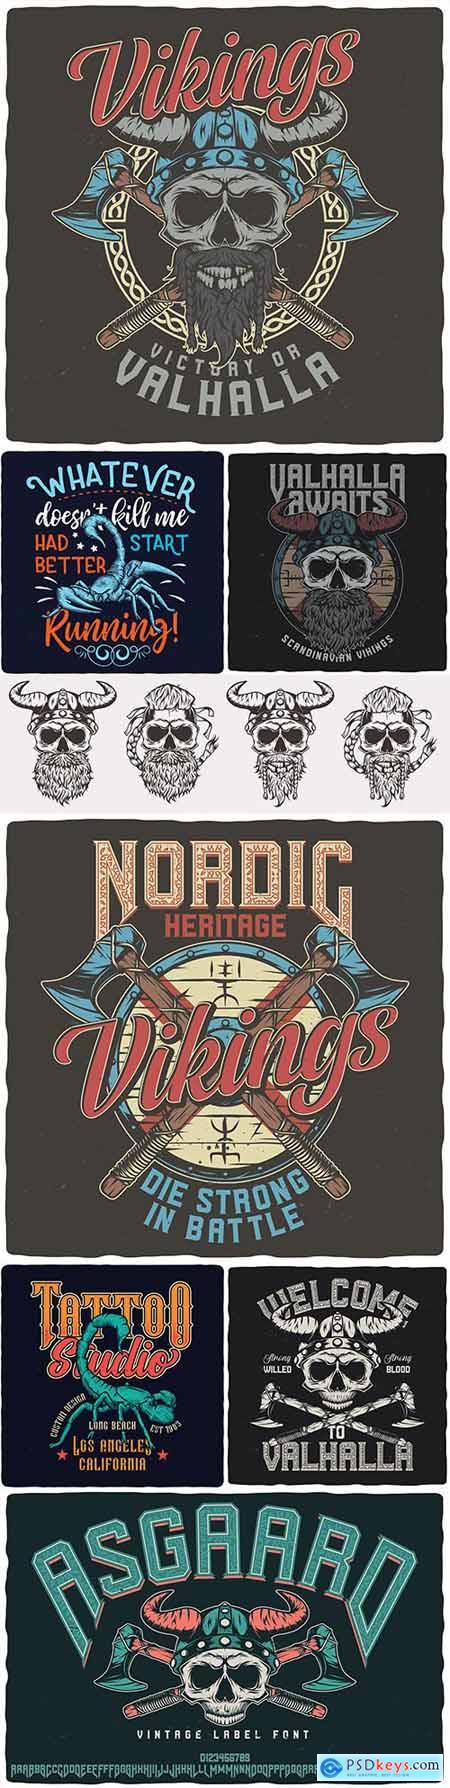 Scorpion and Viking vintage design tattoo illustrations